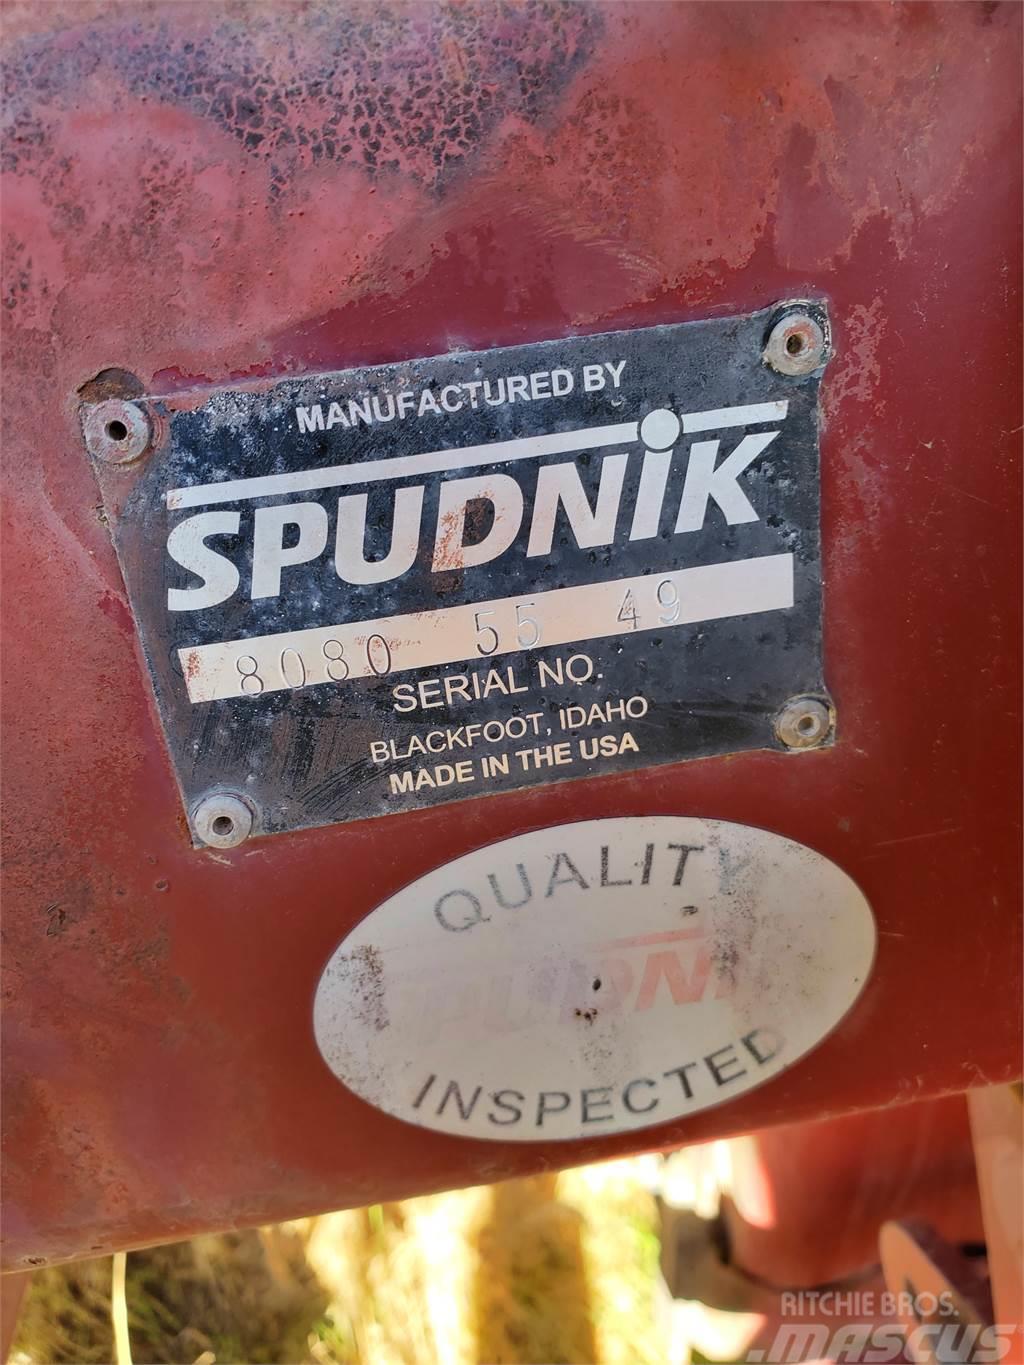  Spudnik 8080 Potato equipment - Others